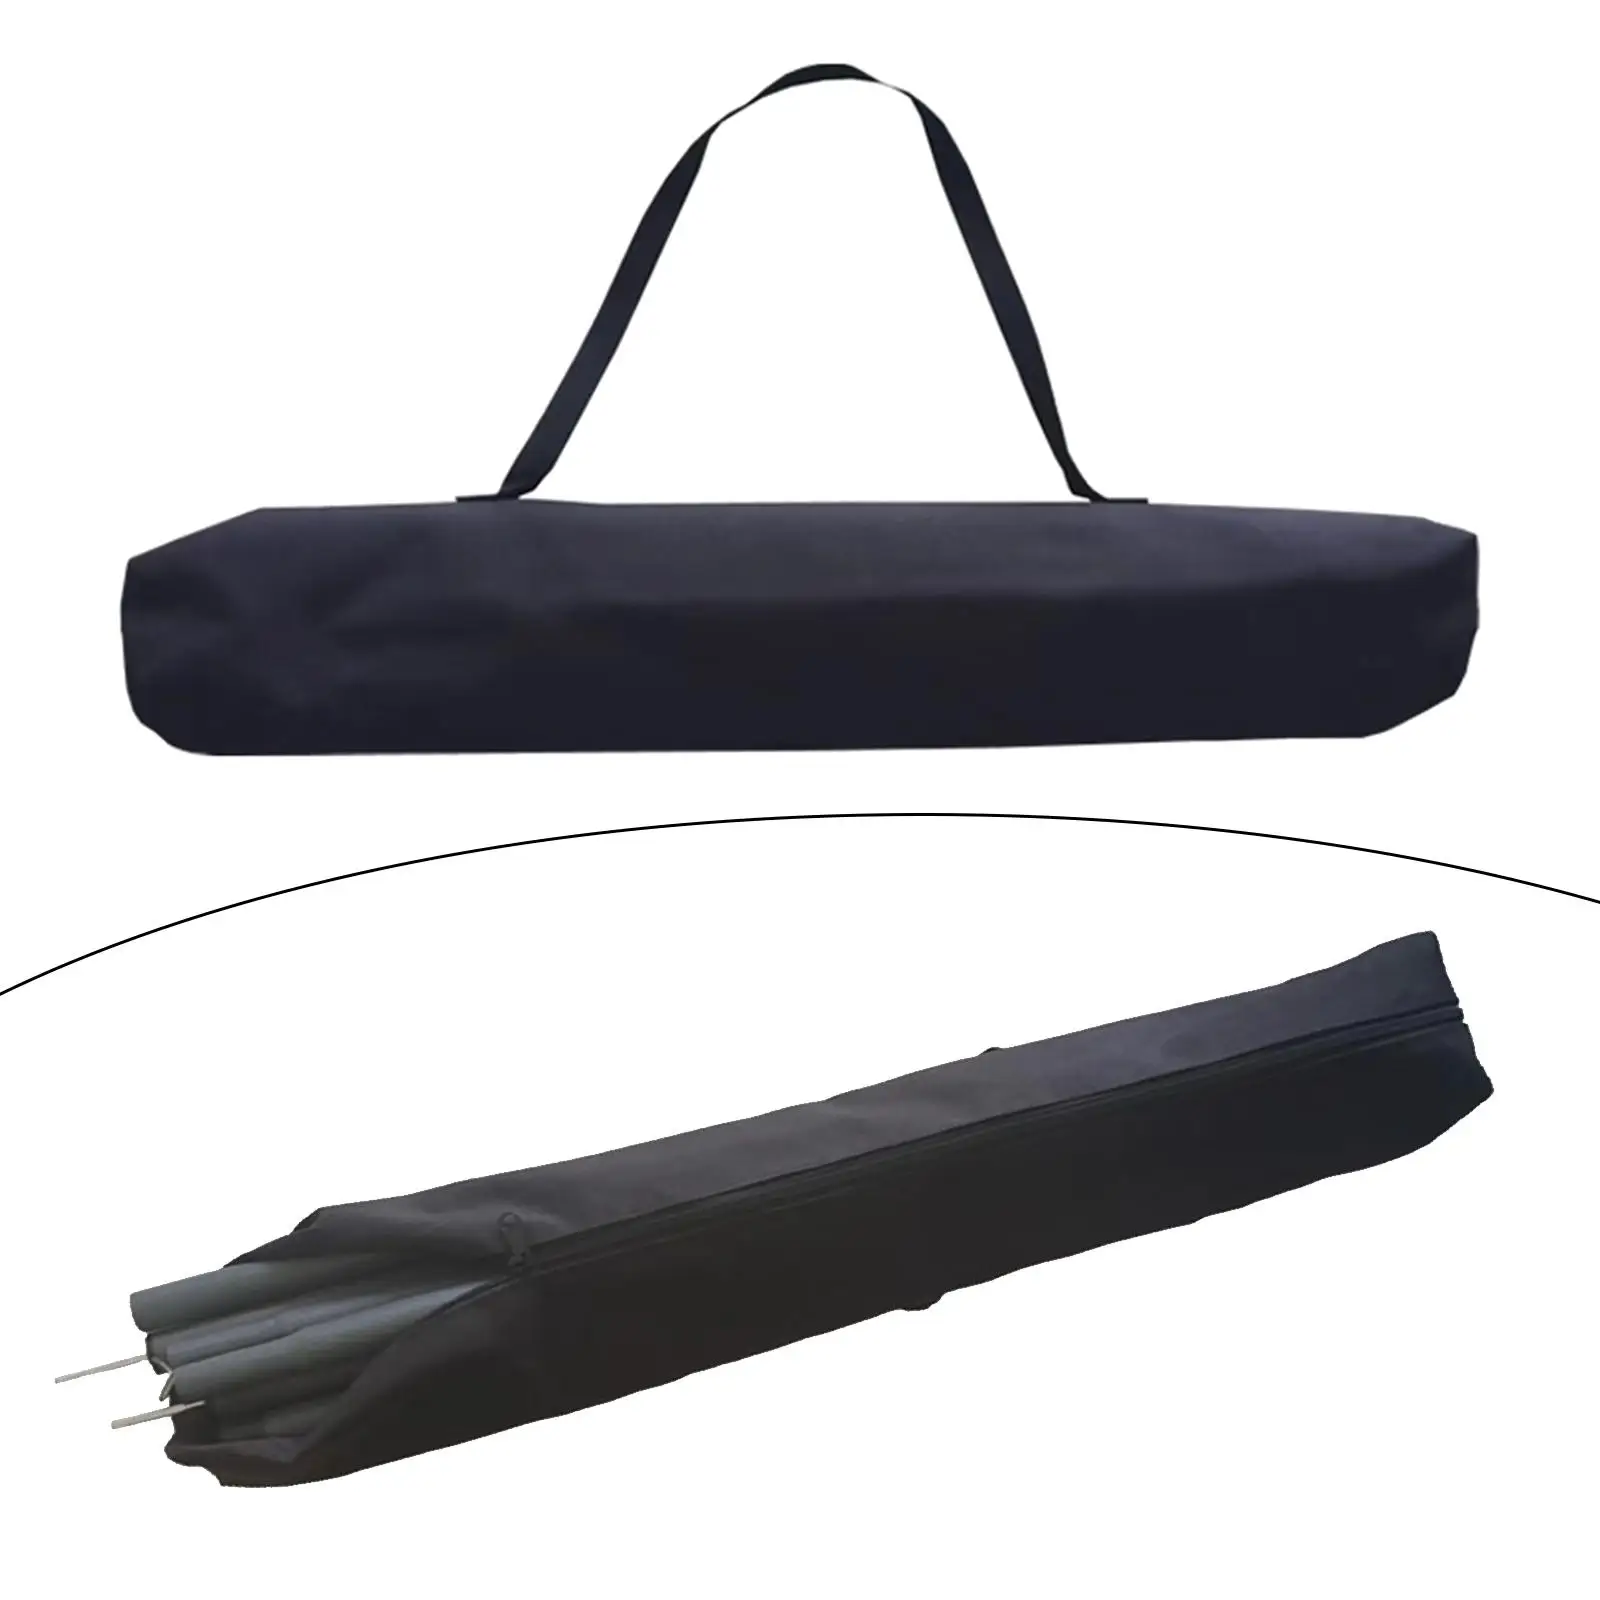 Tent Pole Storage Bag Zipper Closure Comfort Durable for Trekking Camping